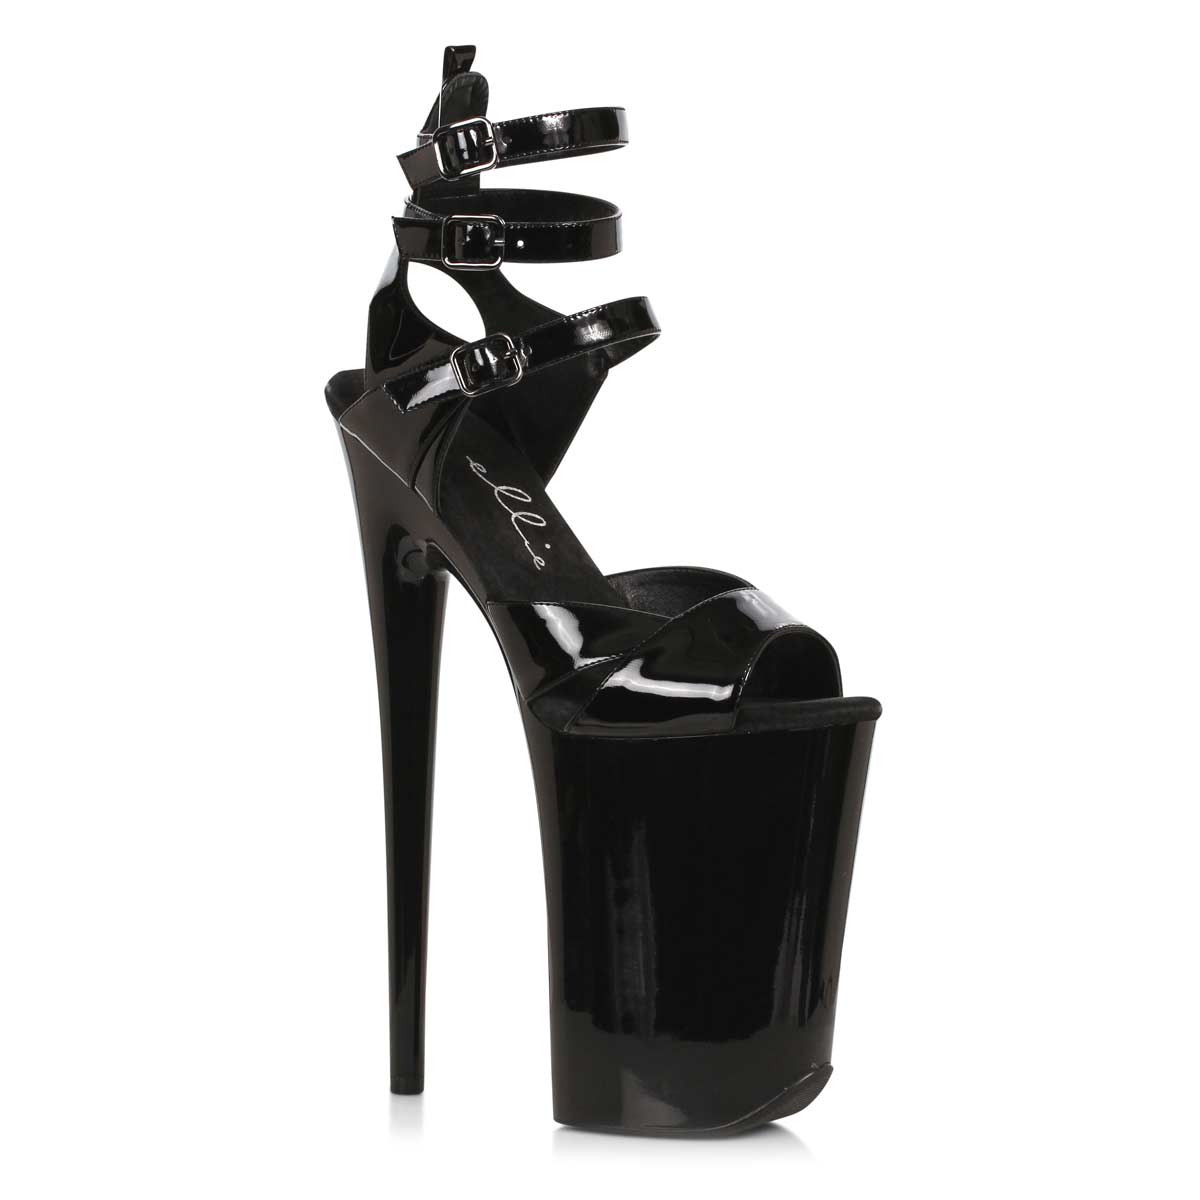 Ellie Shoes 909-ATHENA Black in Sexy Heels & Platforms - $112.63